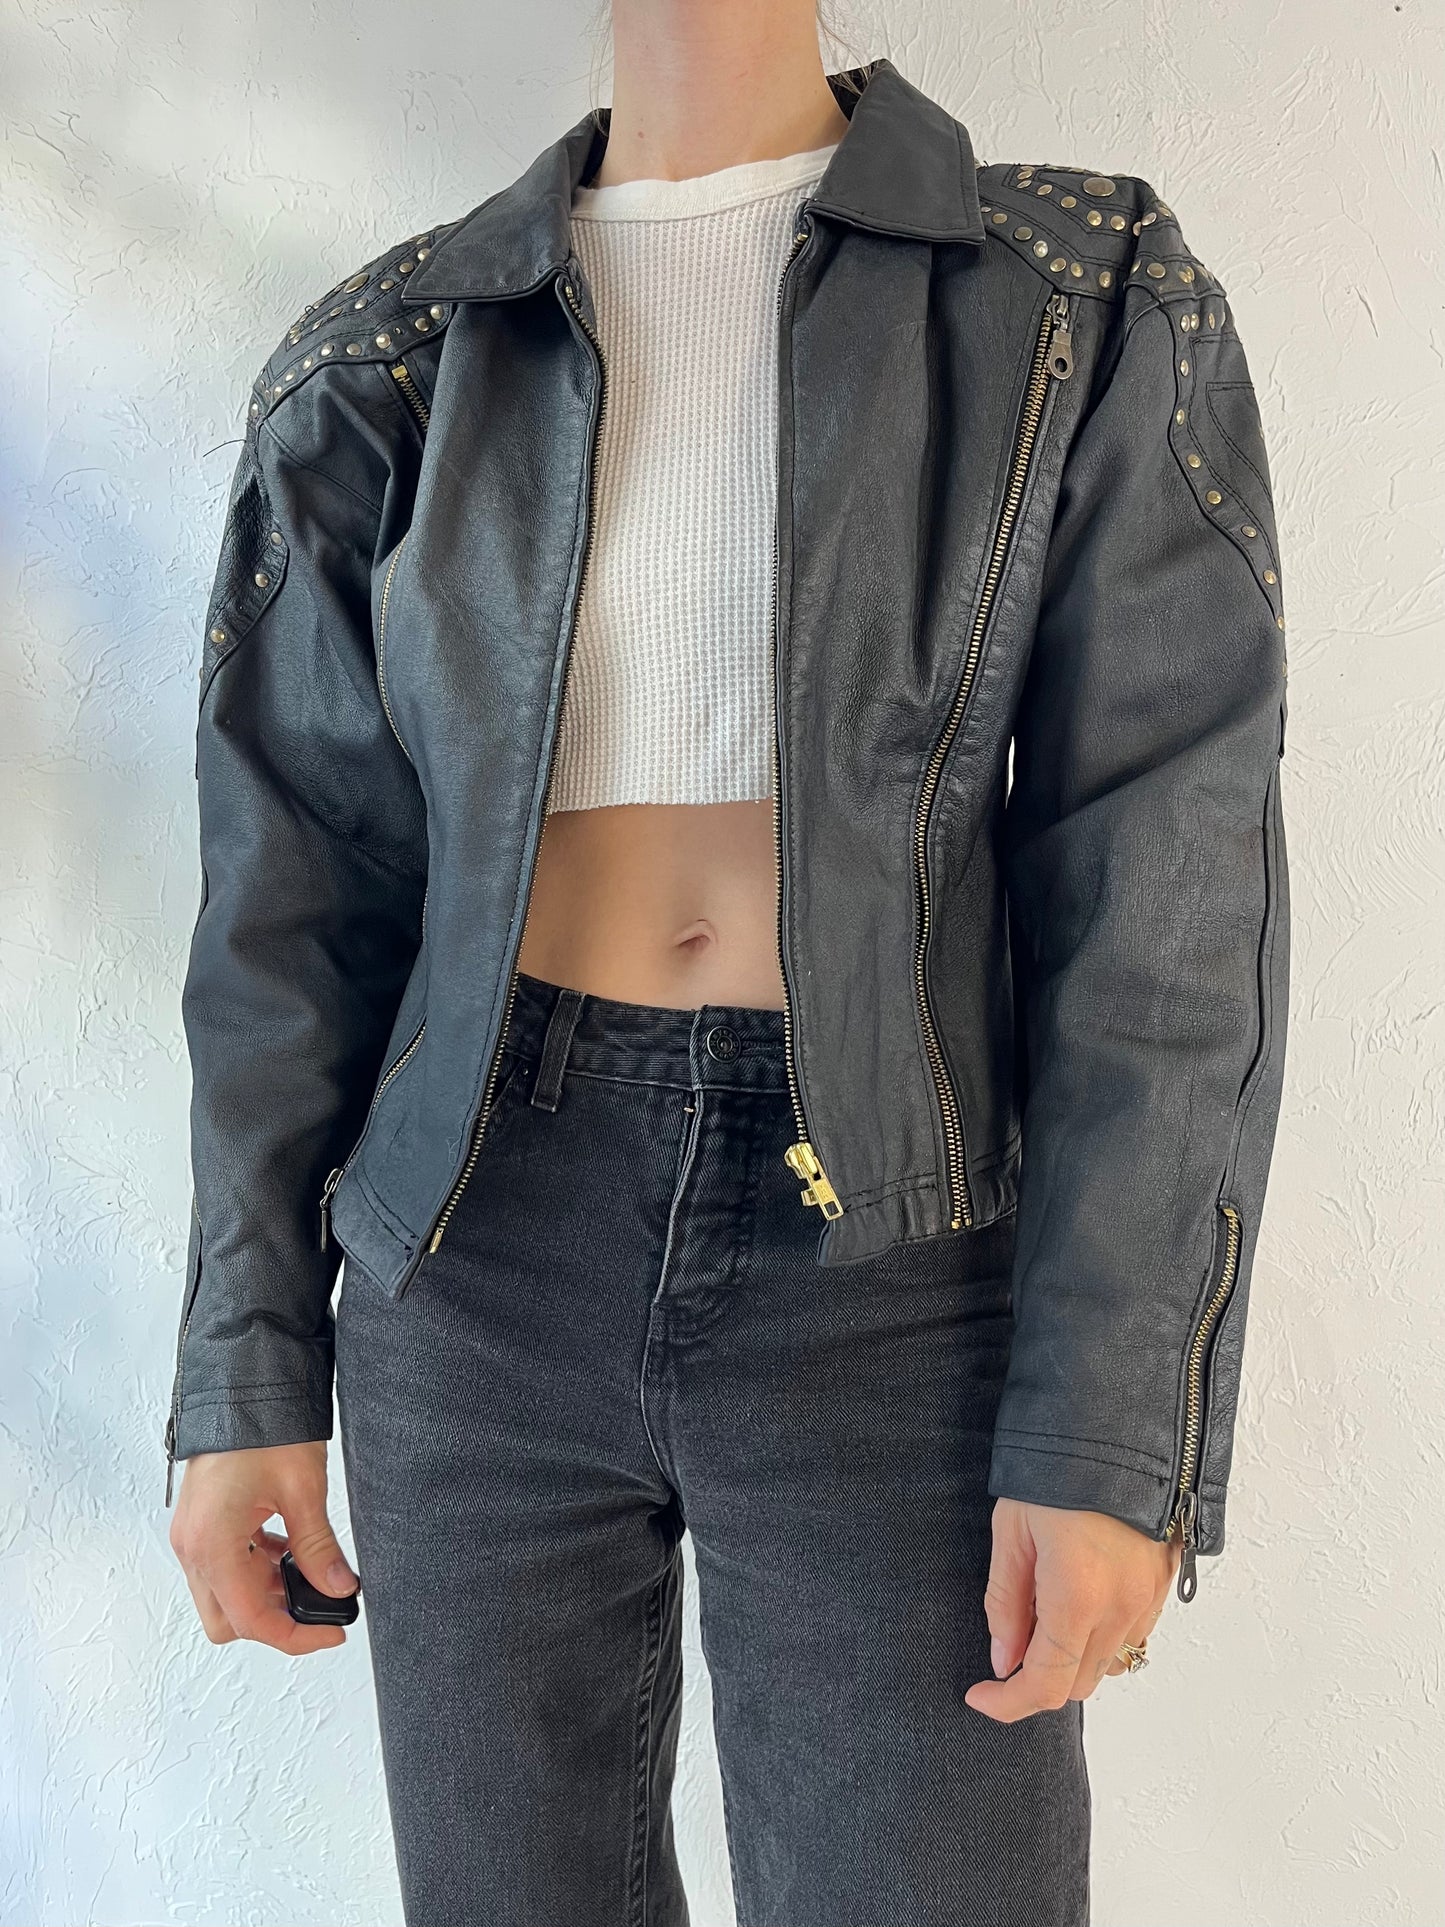 90s 'Boutique of Leathers' Black Studded Leather Jacket / Medium